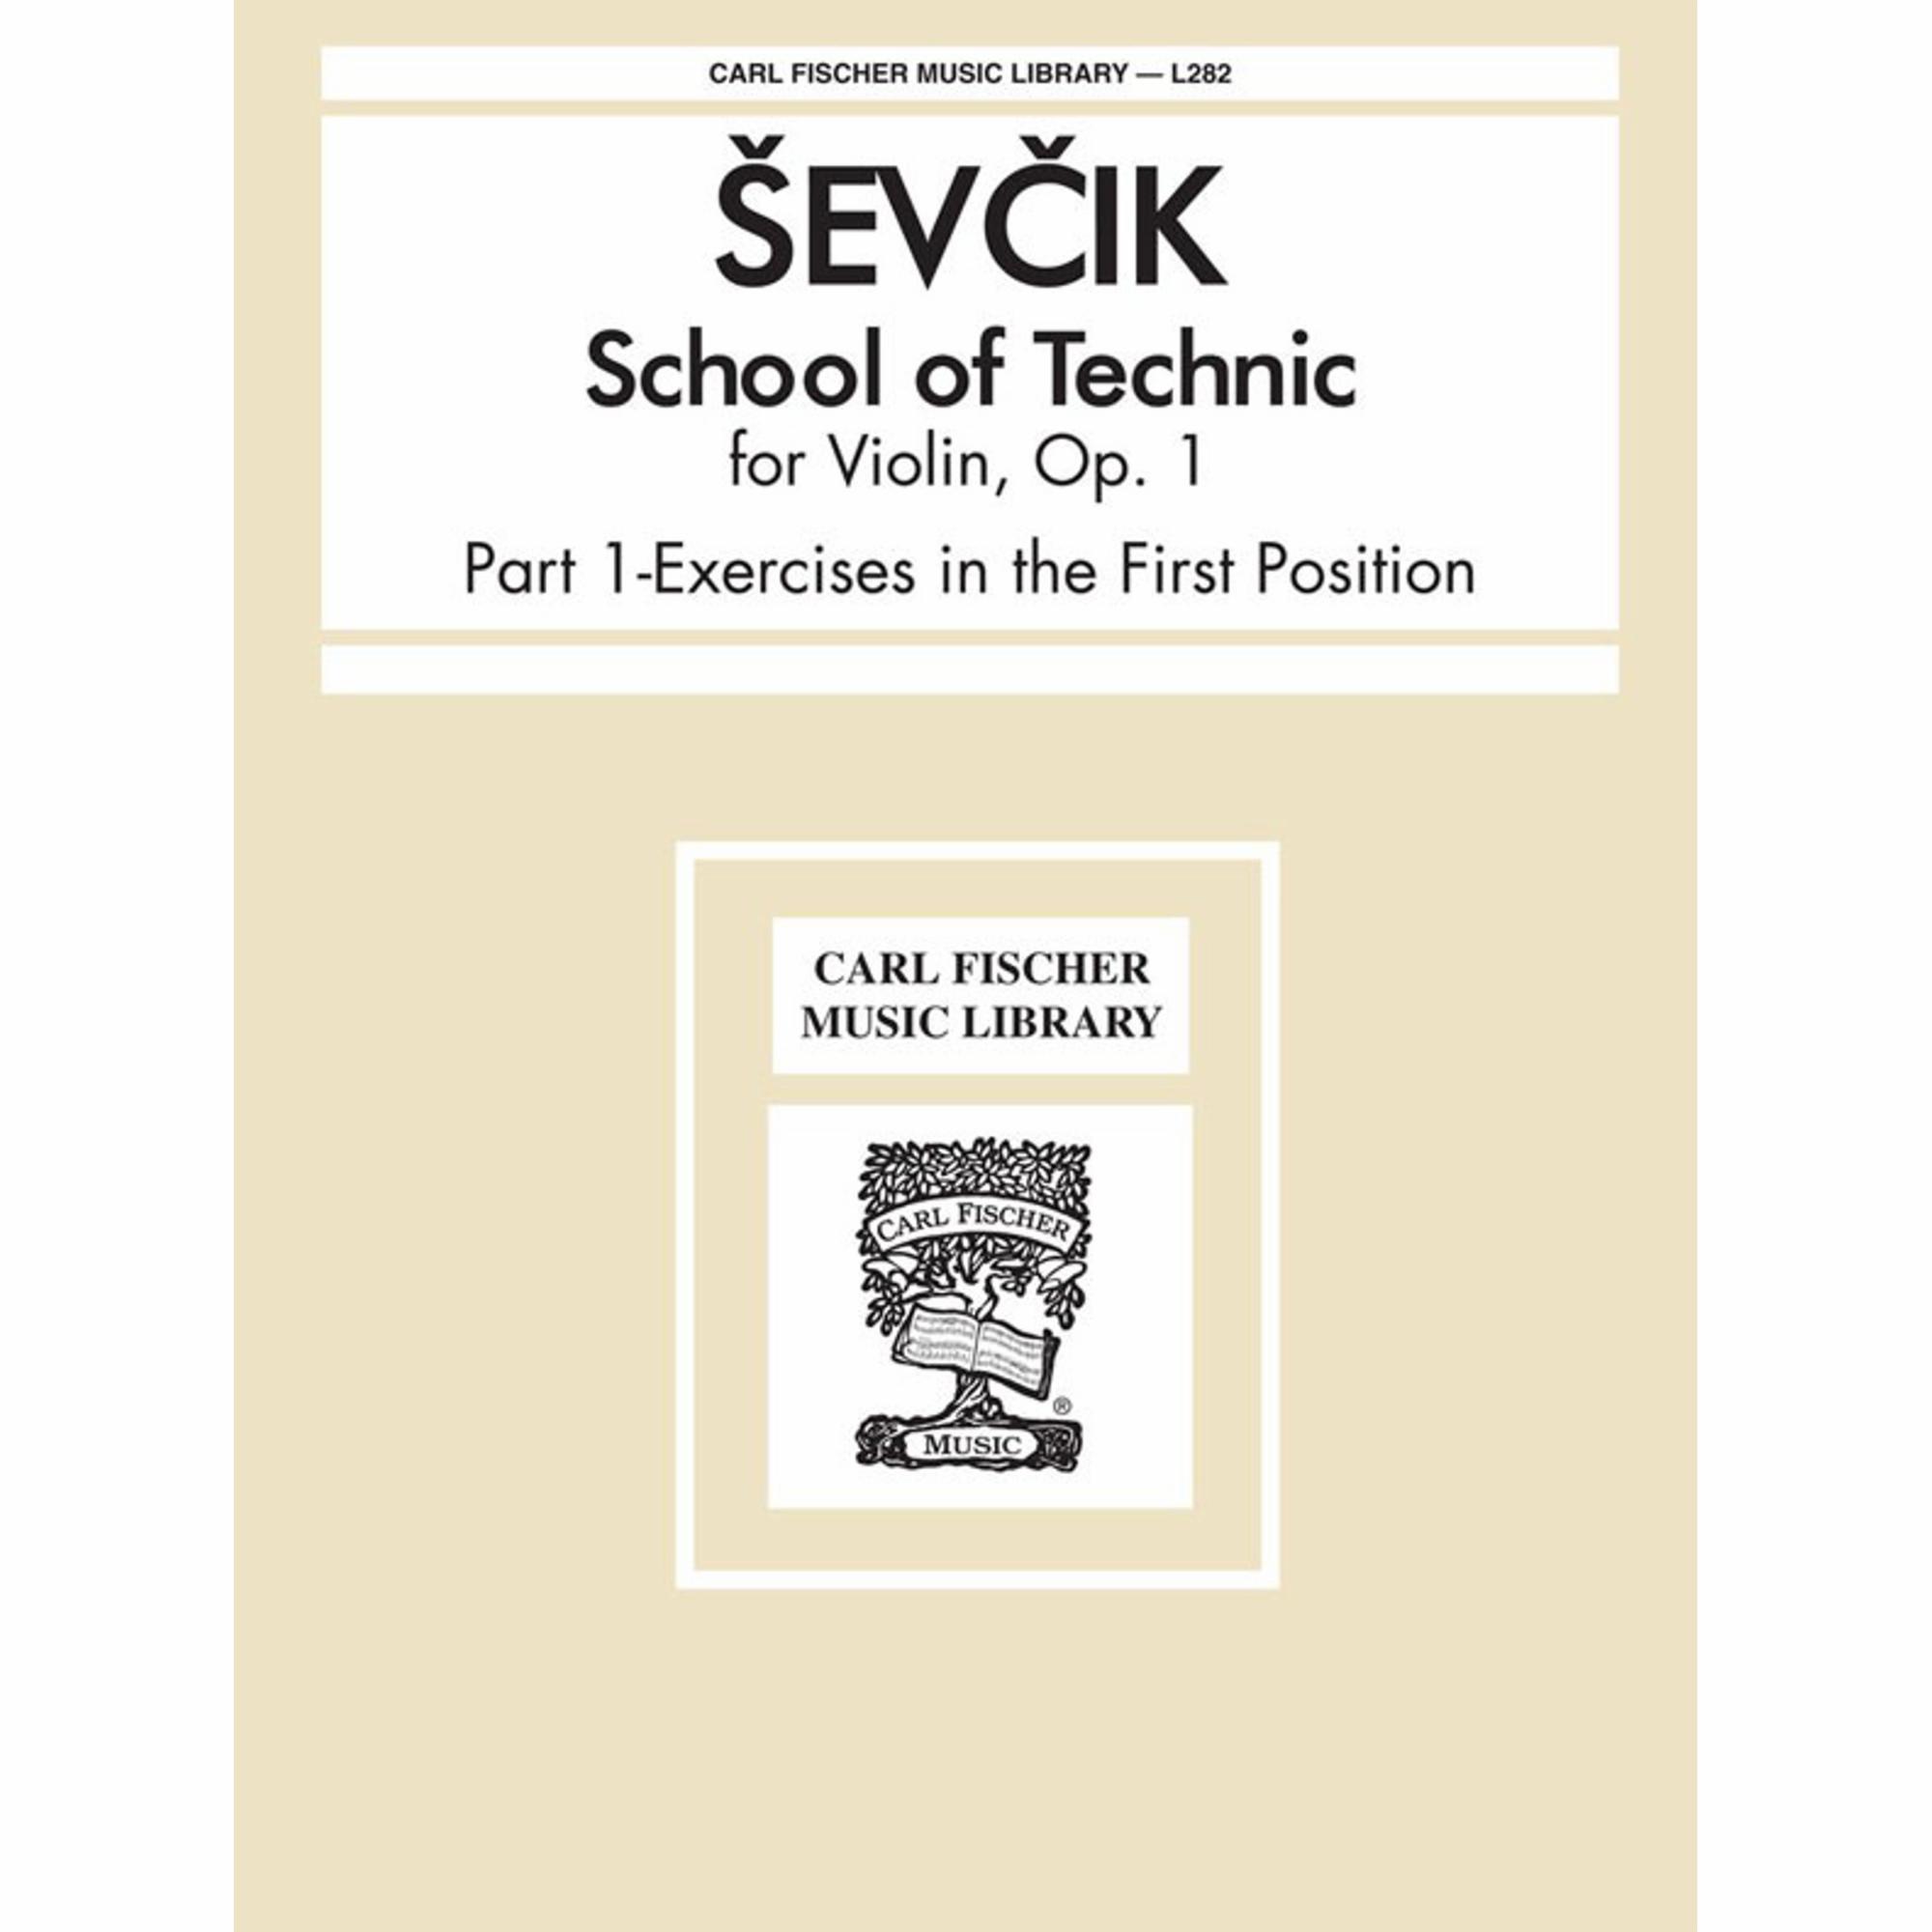 Sevcik -- School of Technic, Op. 1, Part 1 for Violin